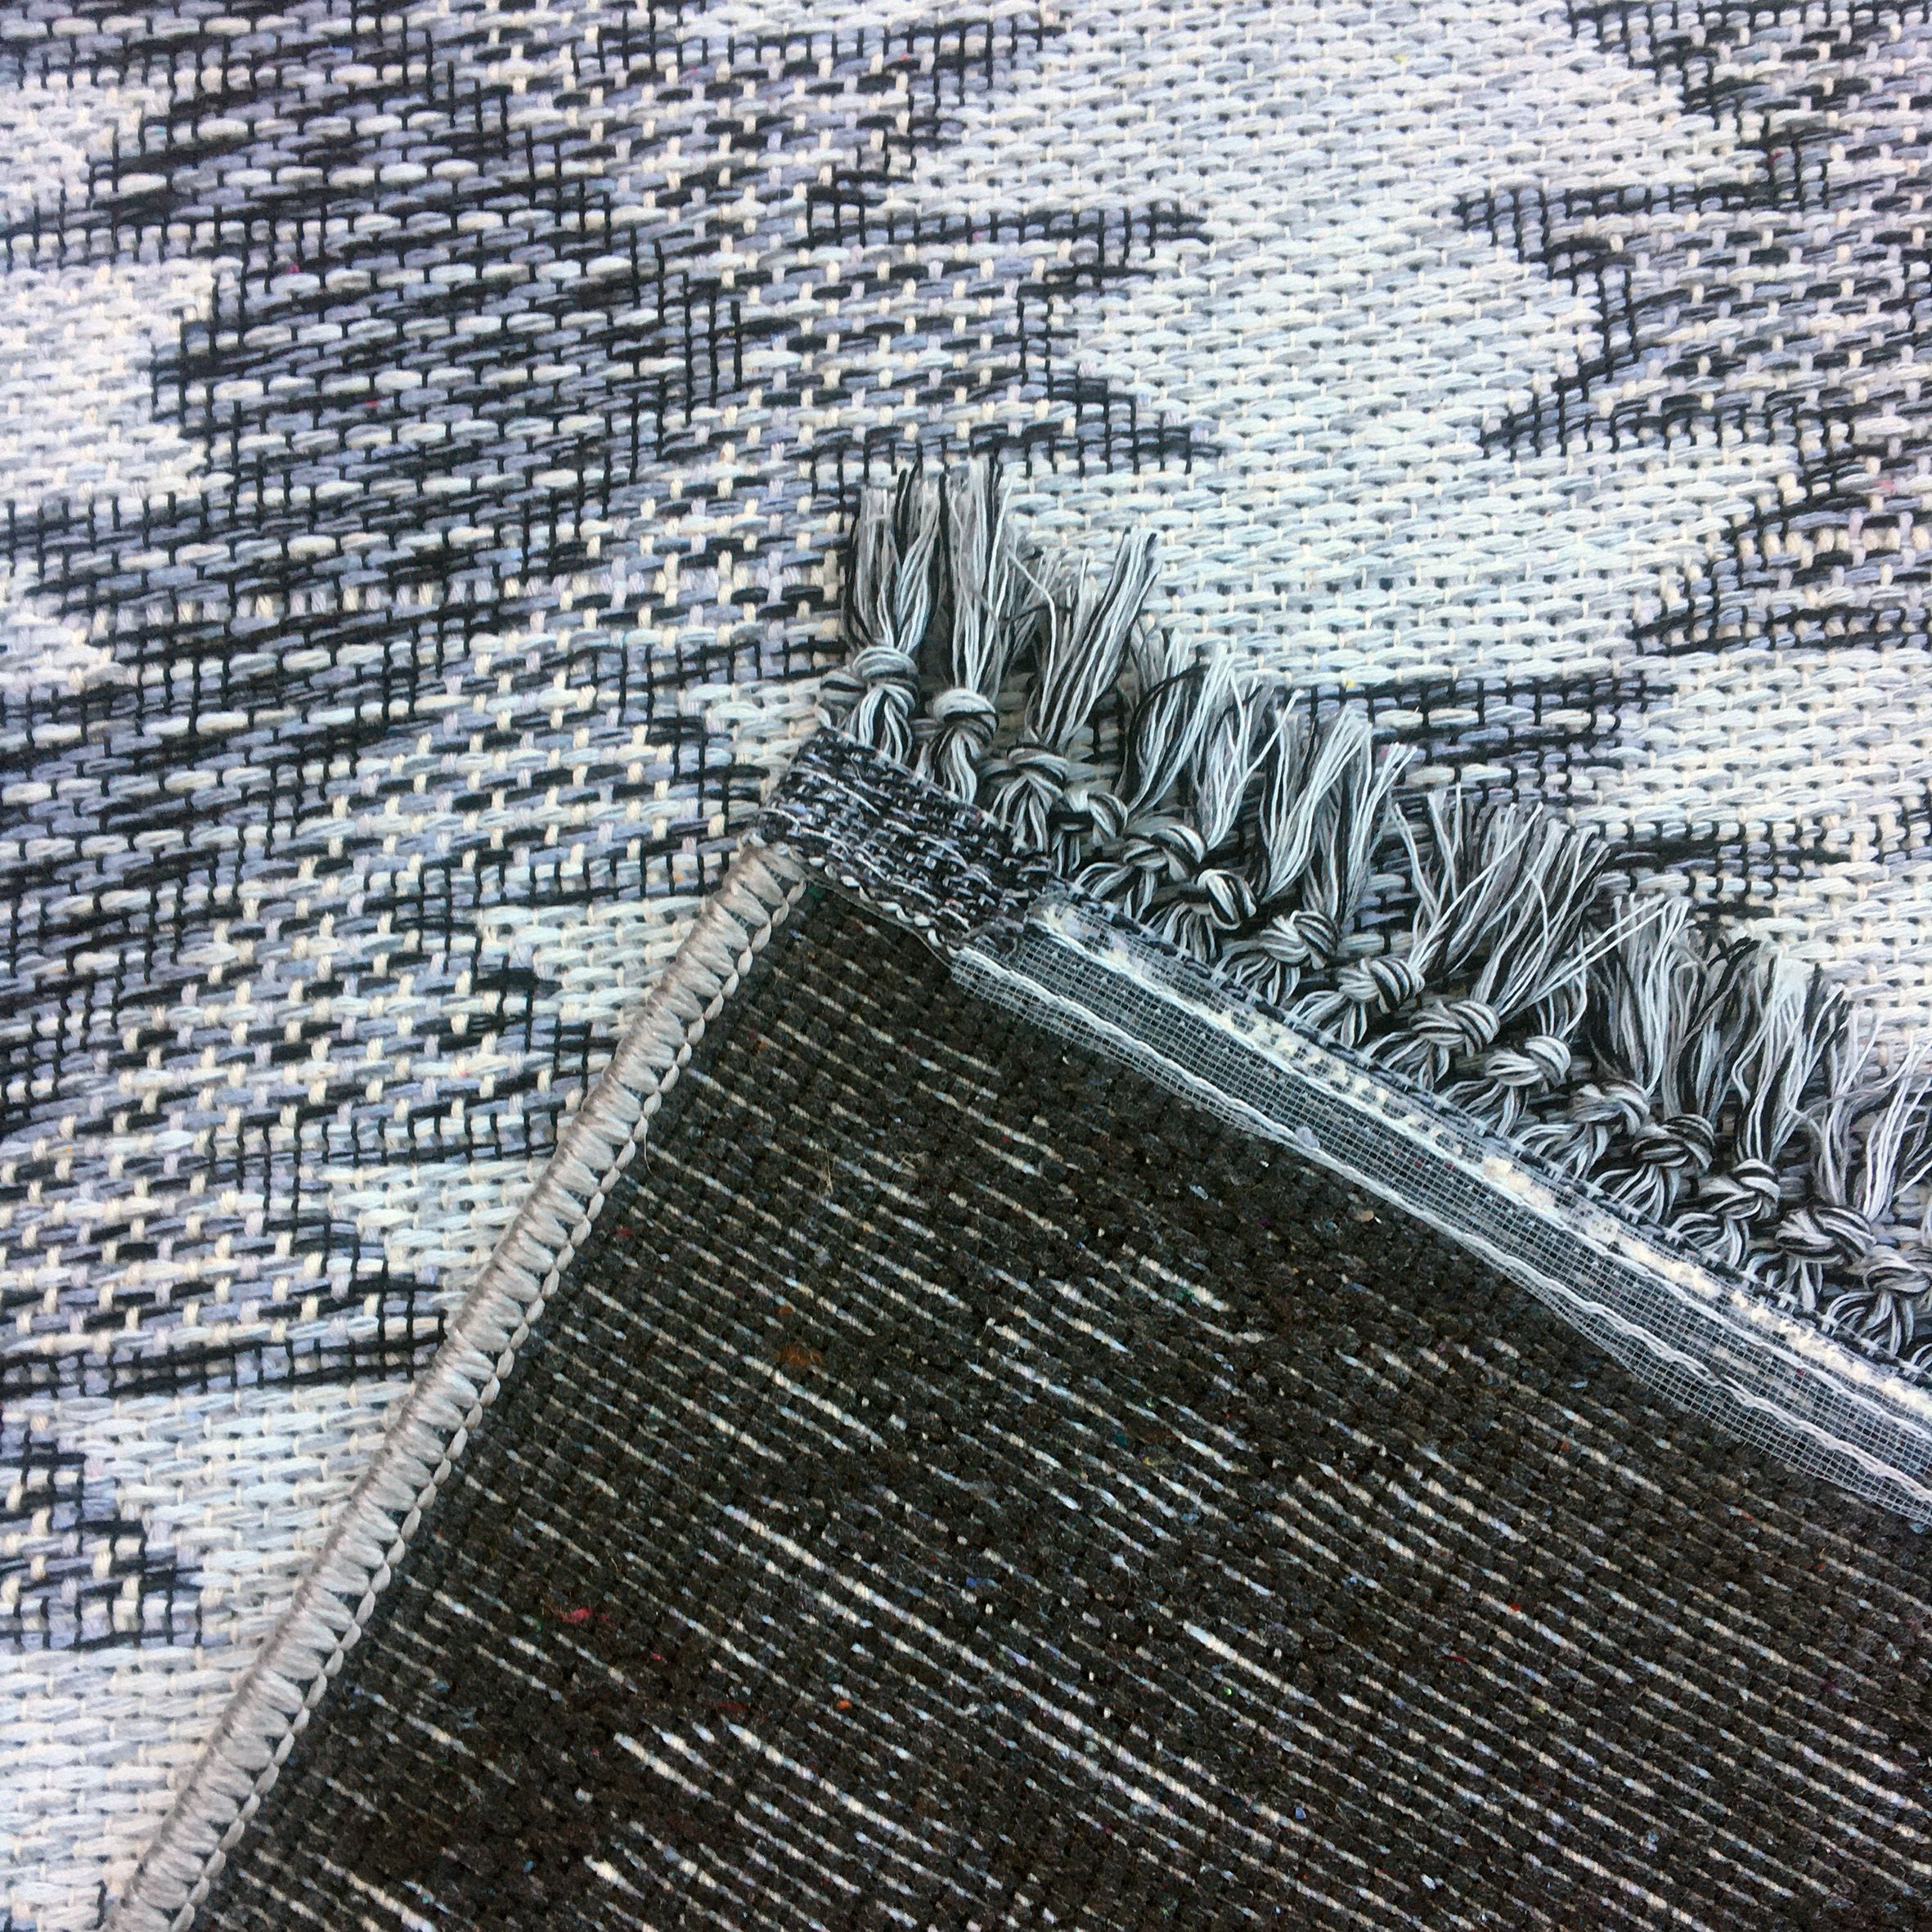 Ankara Grey Aztec Woven effect Medium Runner, (L)180cm x (W)60cm